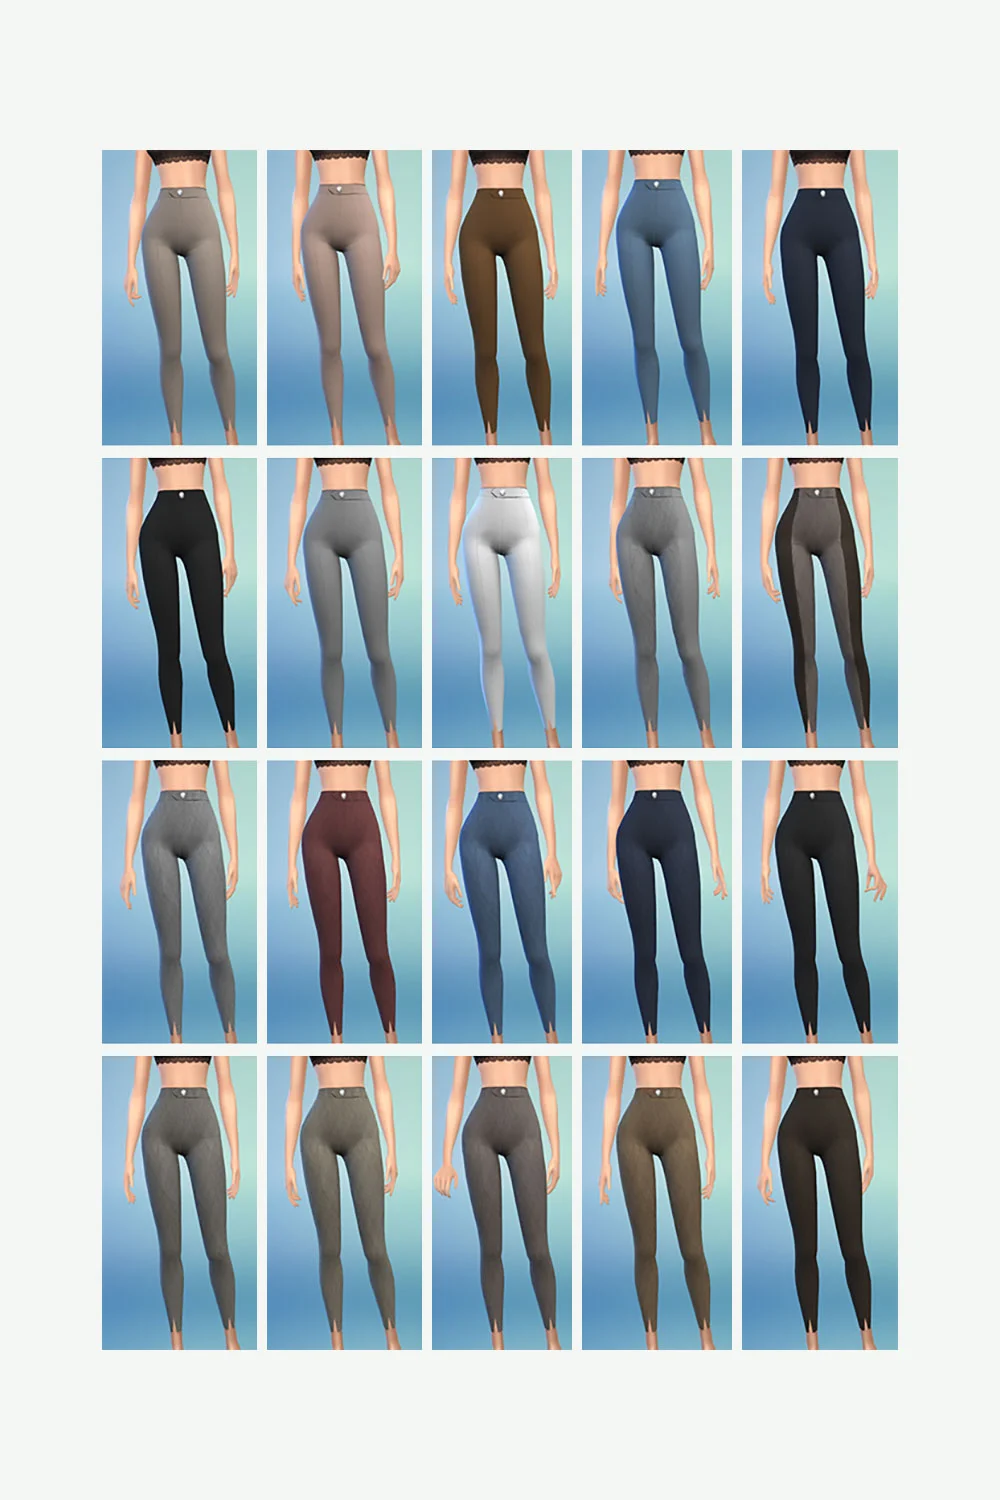 The Sims 4 CC Pants